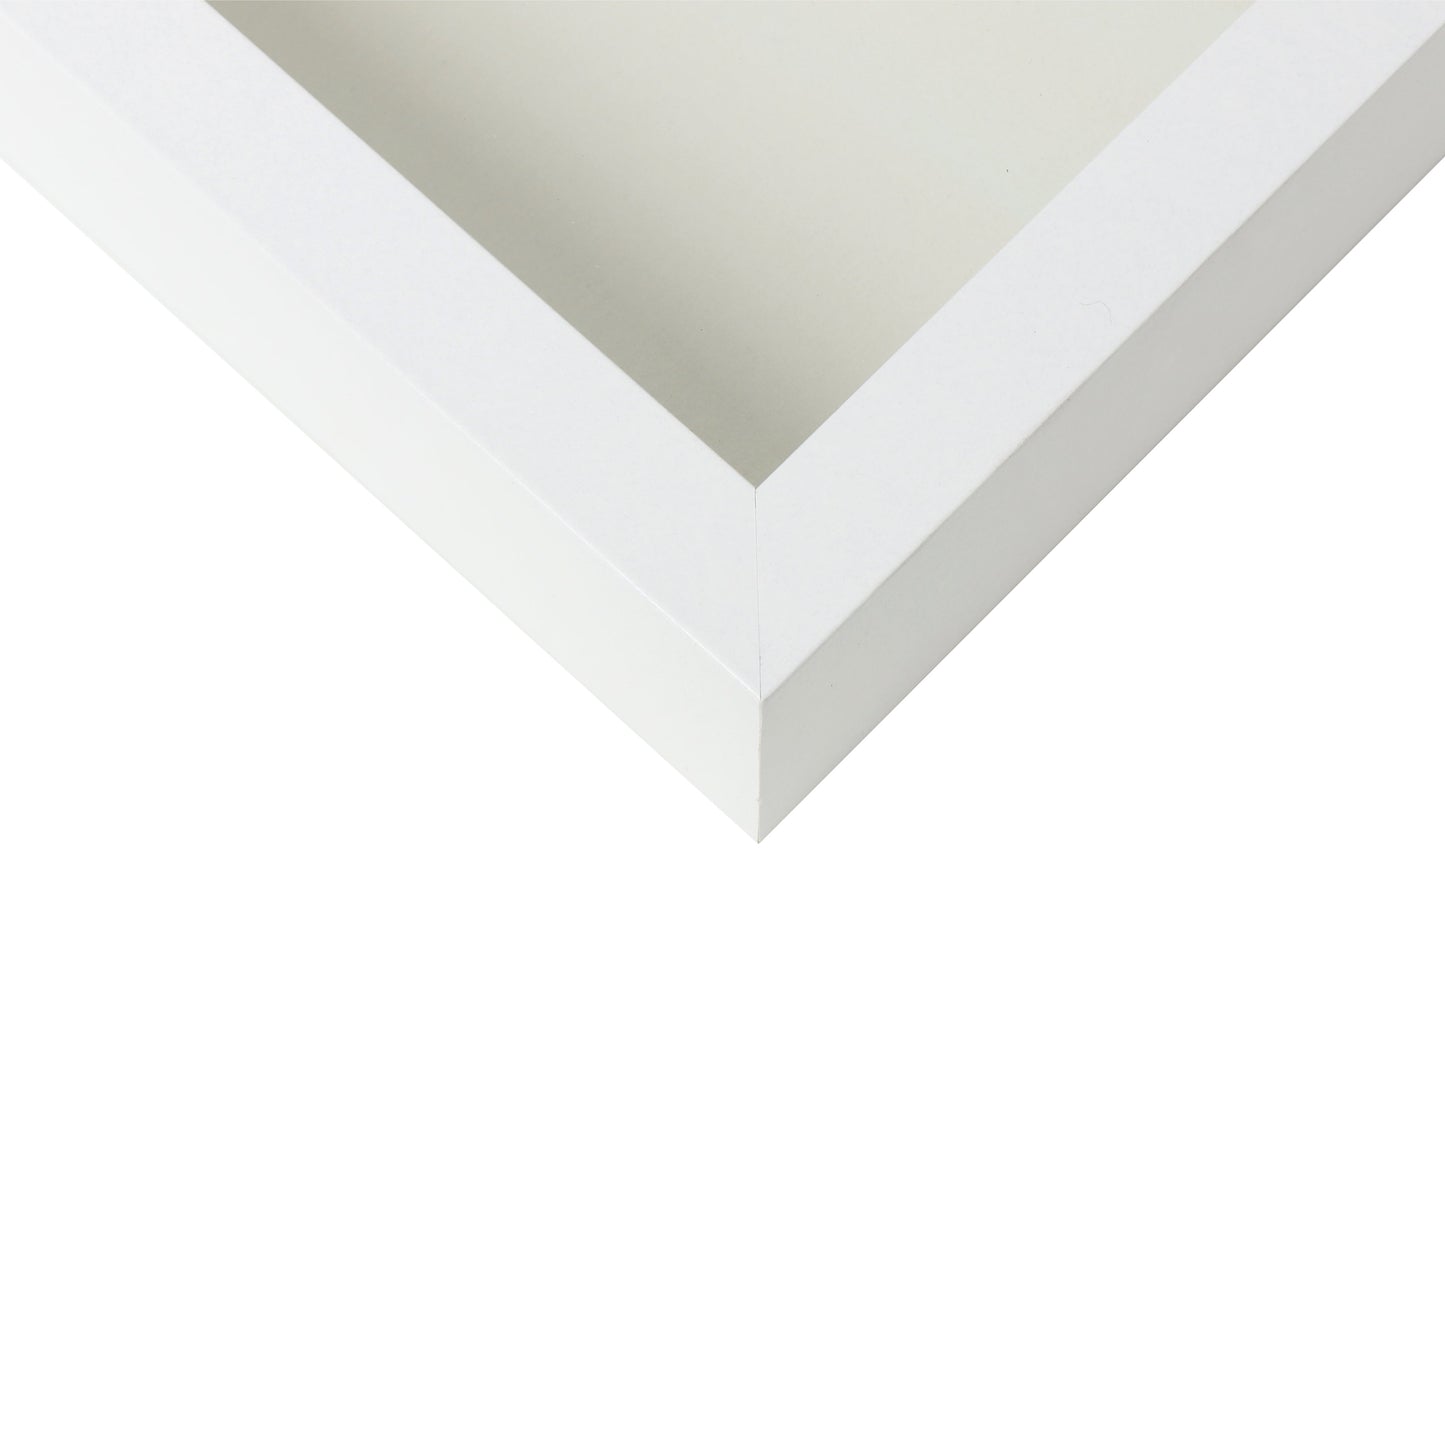 8.5” x 11” White Wood Shadow Box Frame